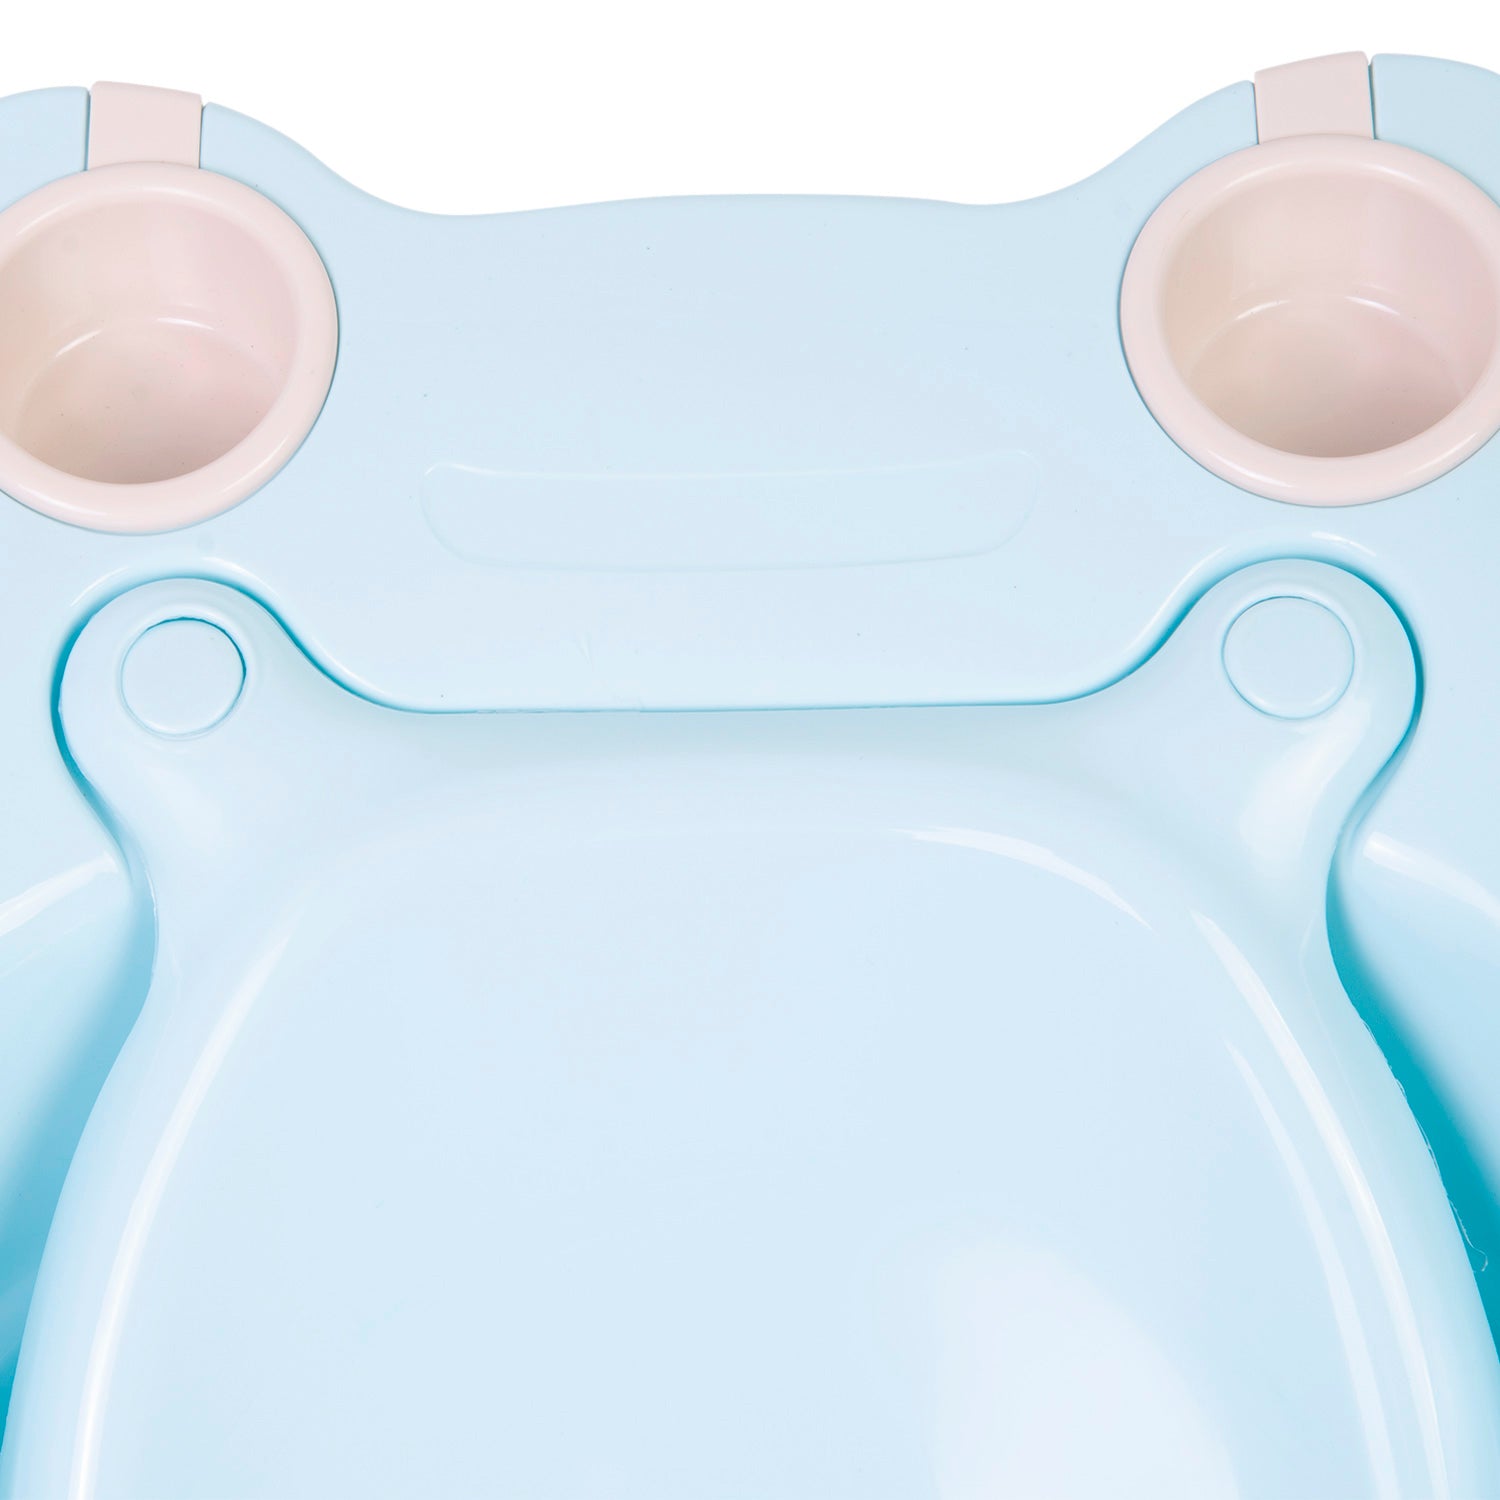 Baby Moo Bath Tub With Bather And Drain Plug Animal Face Blue